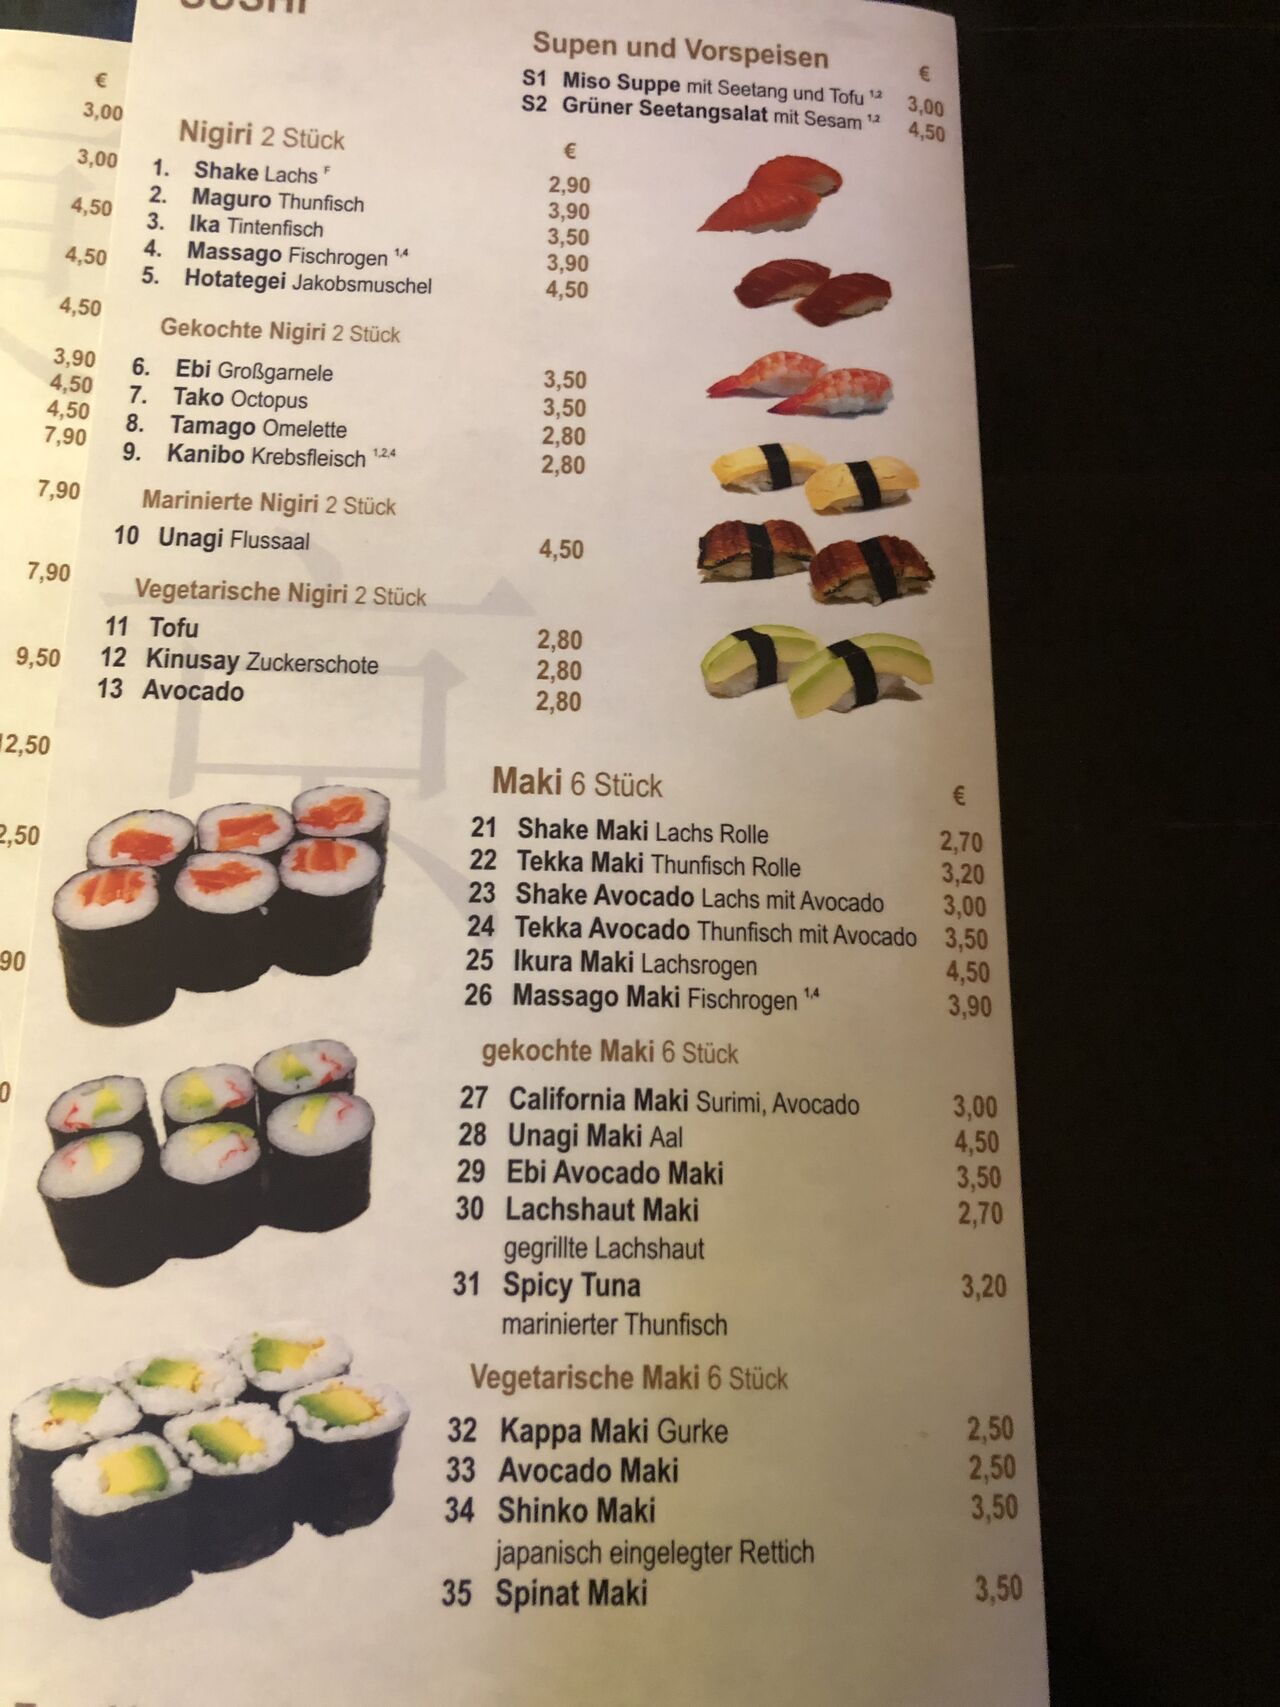 A photo of Tokyo Kaiten Sushi